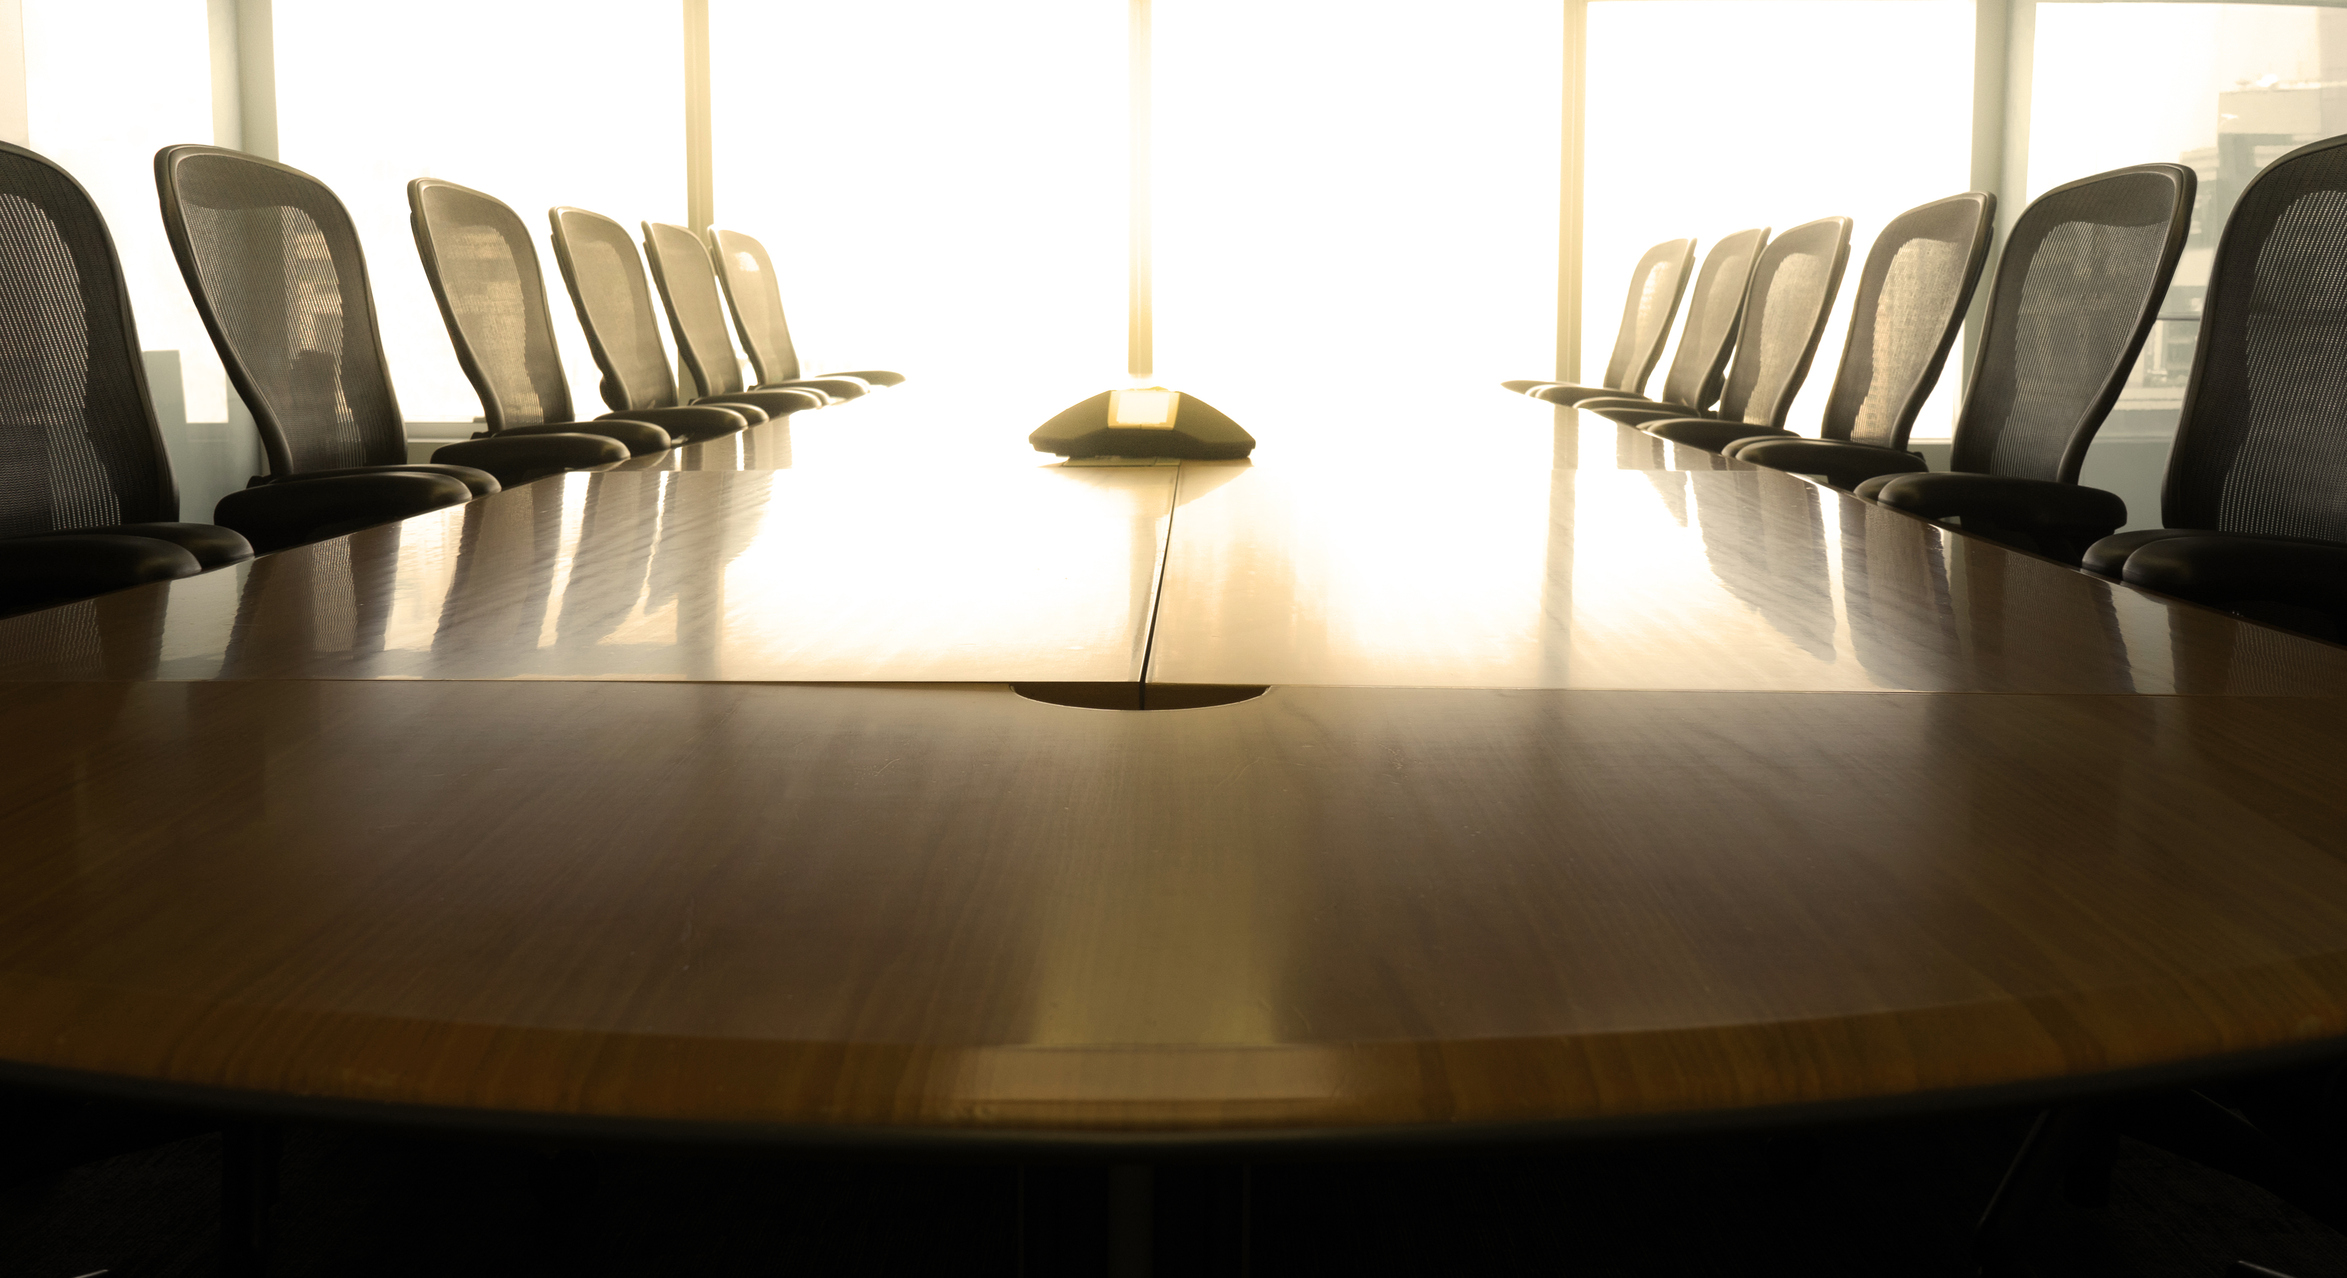 ADISA Announces 2019 Board of Directors